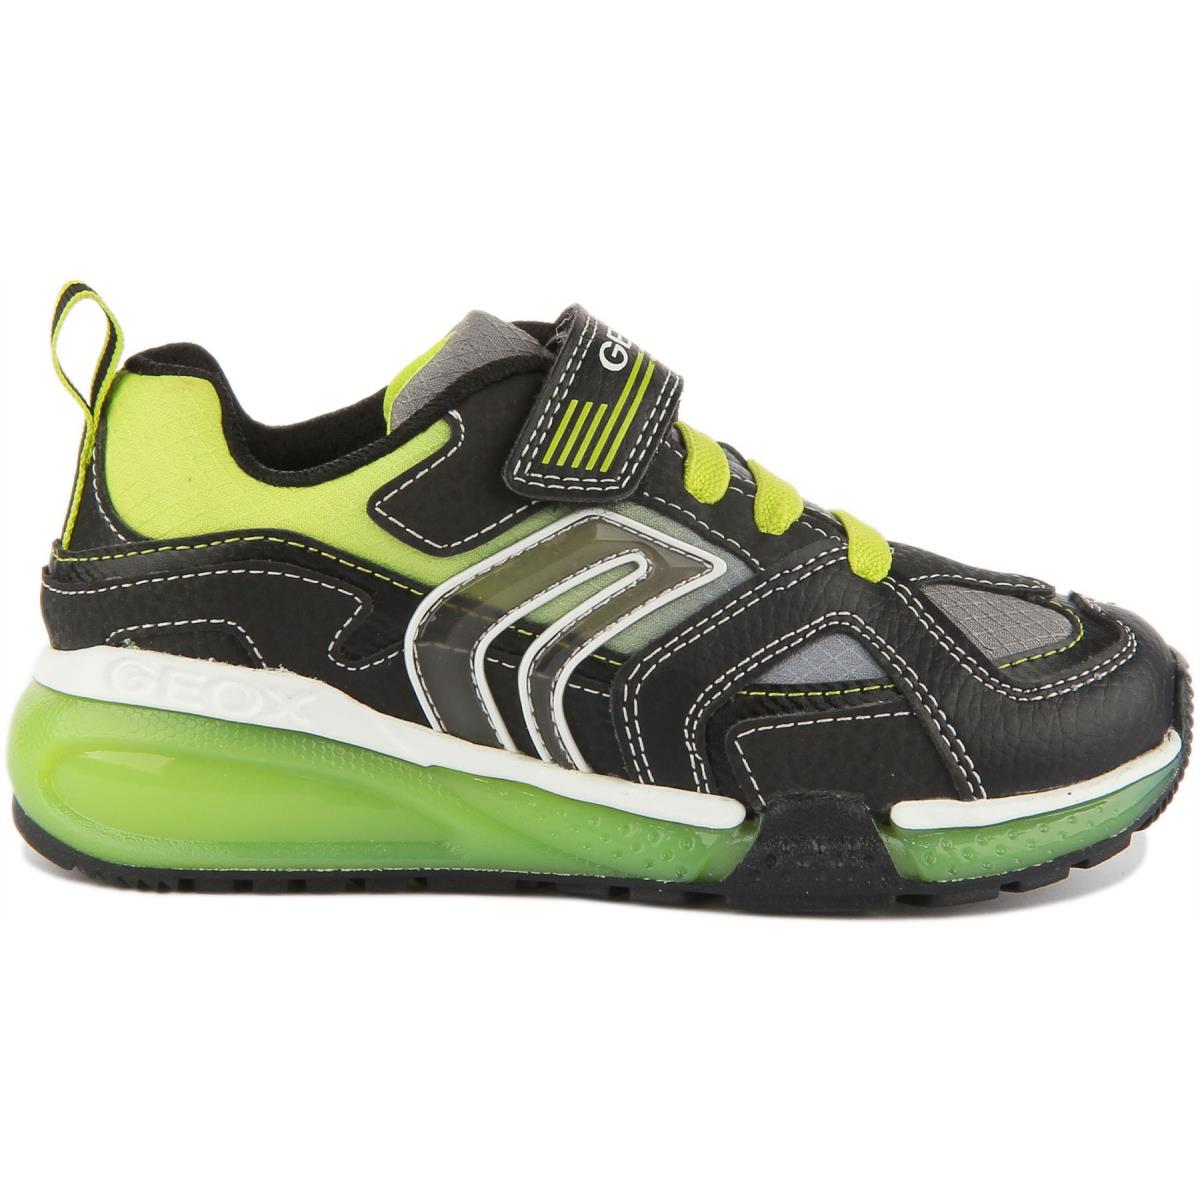 Geox J Bayonyc Boys Single Strap Slip On Sneakers In Black Green Size US 8 - 4